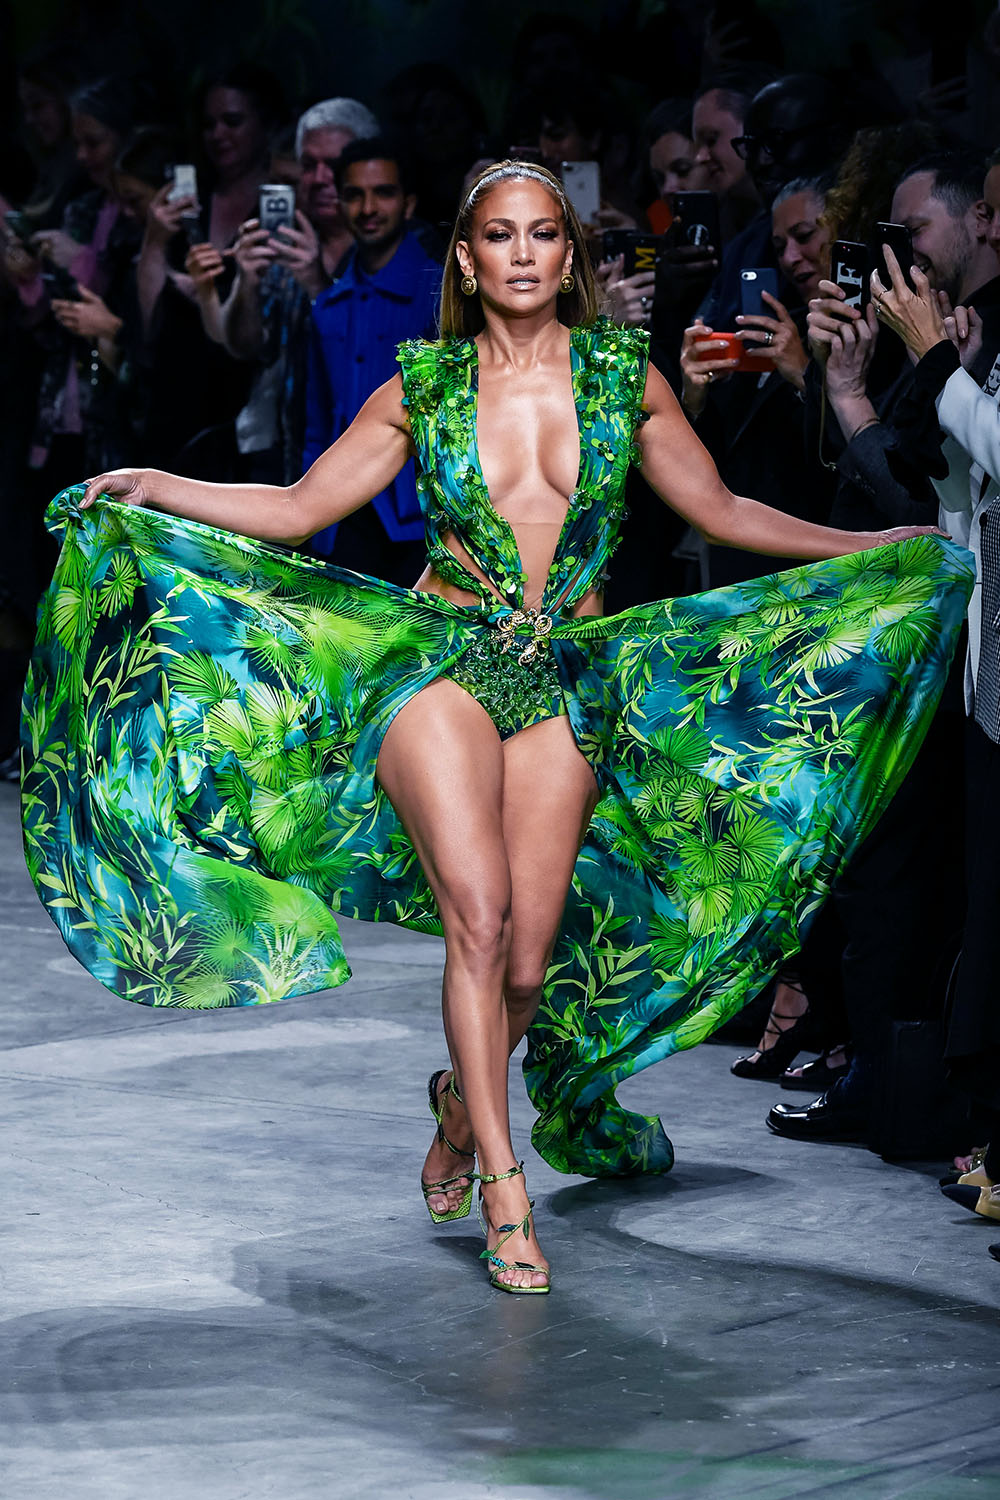 File:Green Versace dress of Jennifer Lopez 2.jpg - Wikipedia